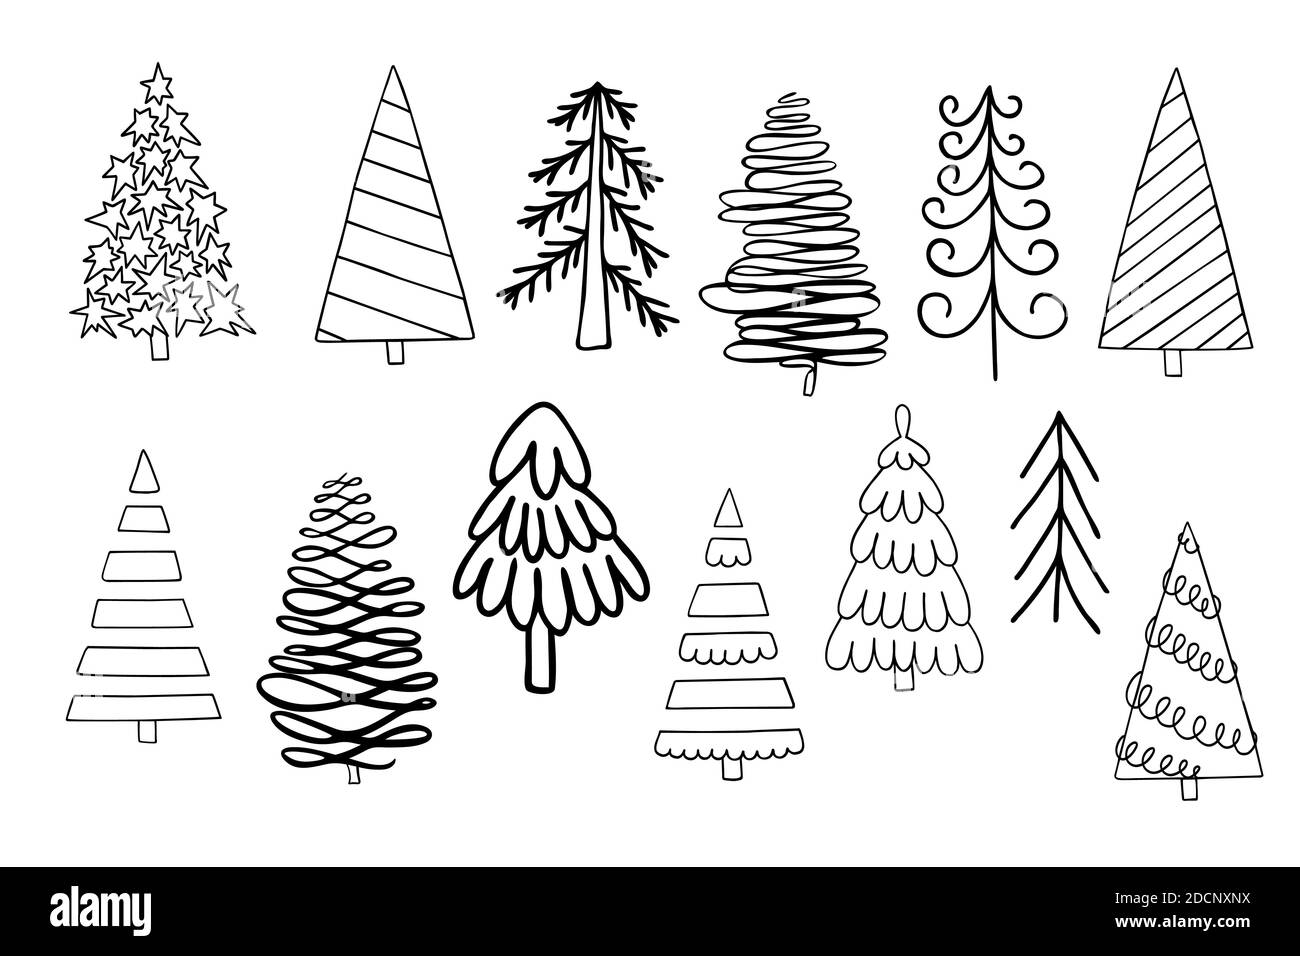 https://c8.alamy.com/comp/2DCNXNX/simple-christmas-tree-hand-drawn-in-doodle-style-minimalist-vector-outline-illustration-winter-holiday-decor-happy-holidays-celebration-family-gatherings-celebration-symbol-festive-mood-pattern-2DCNXNX.jpg